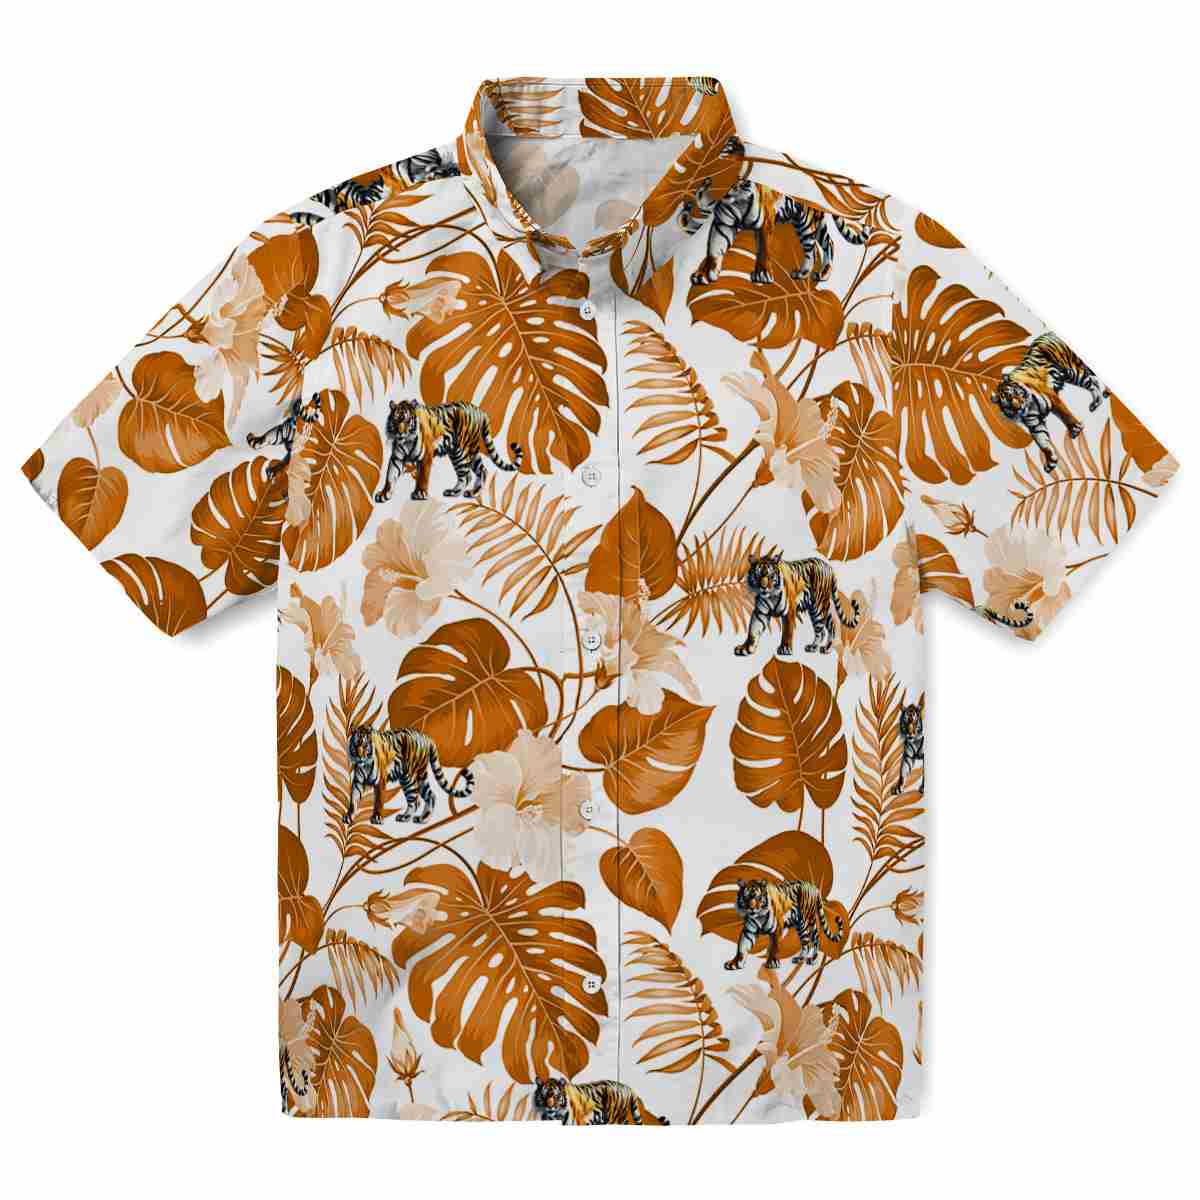 Tiger Tropical Plants Hawaiian Shirt Best selling